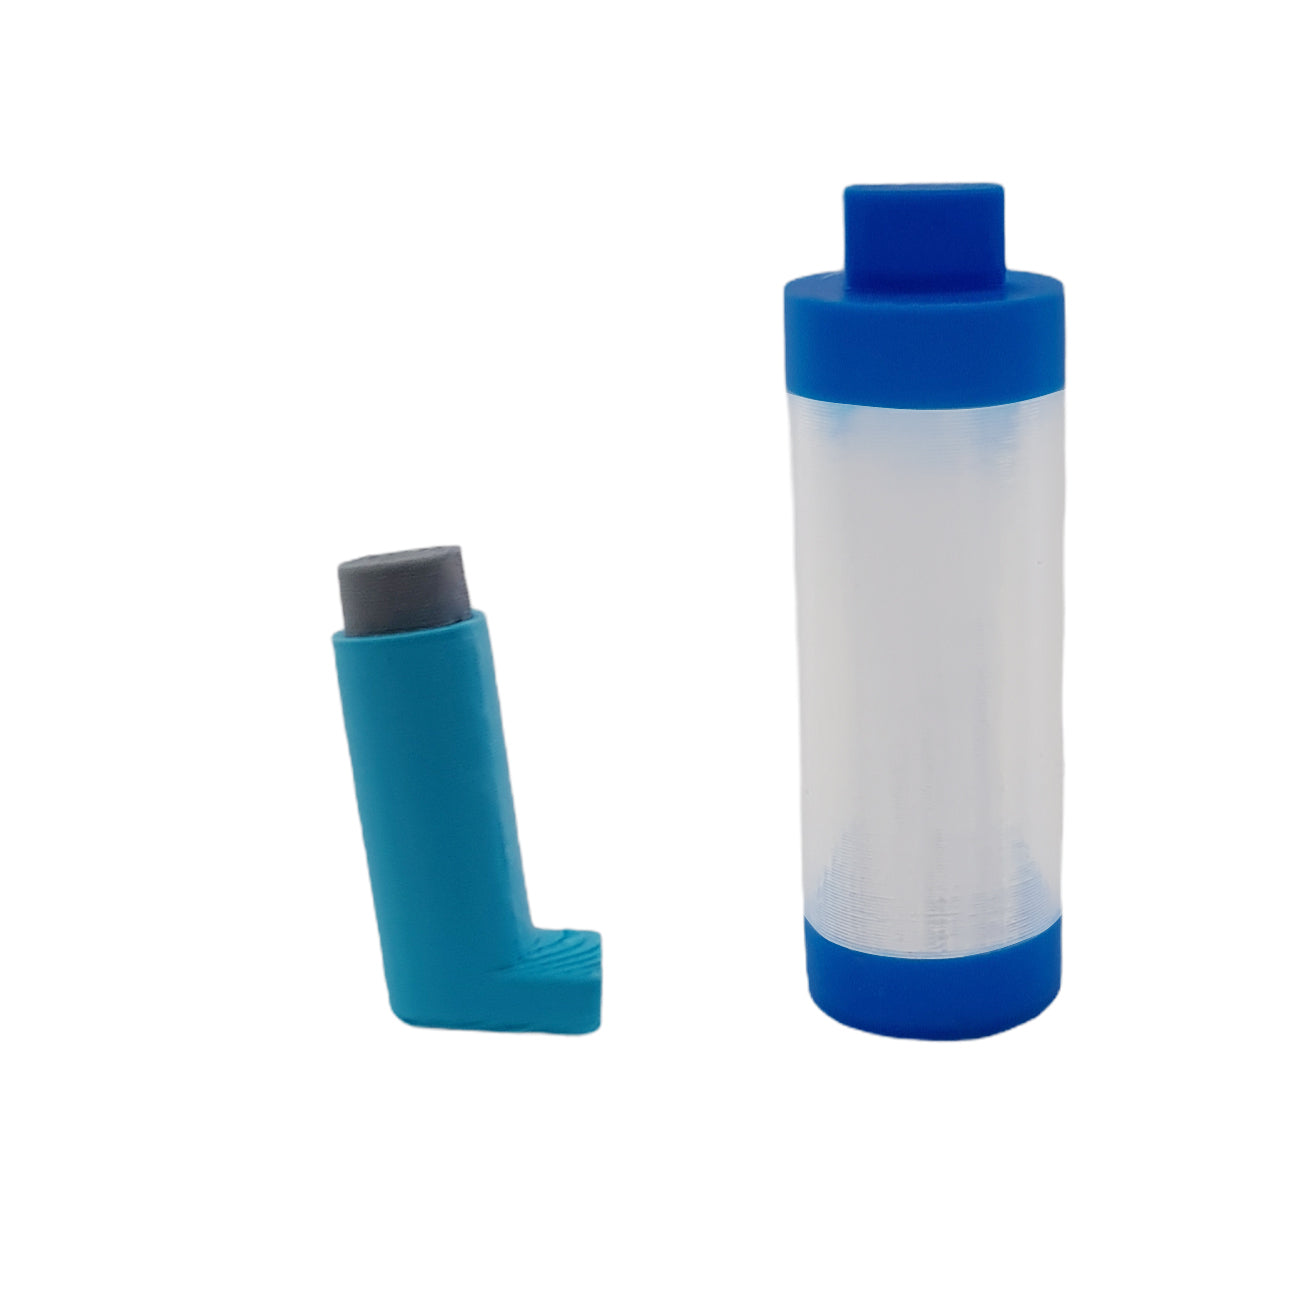 elf sized asthma puffer, inhaler and spacer set.